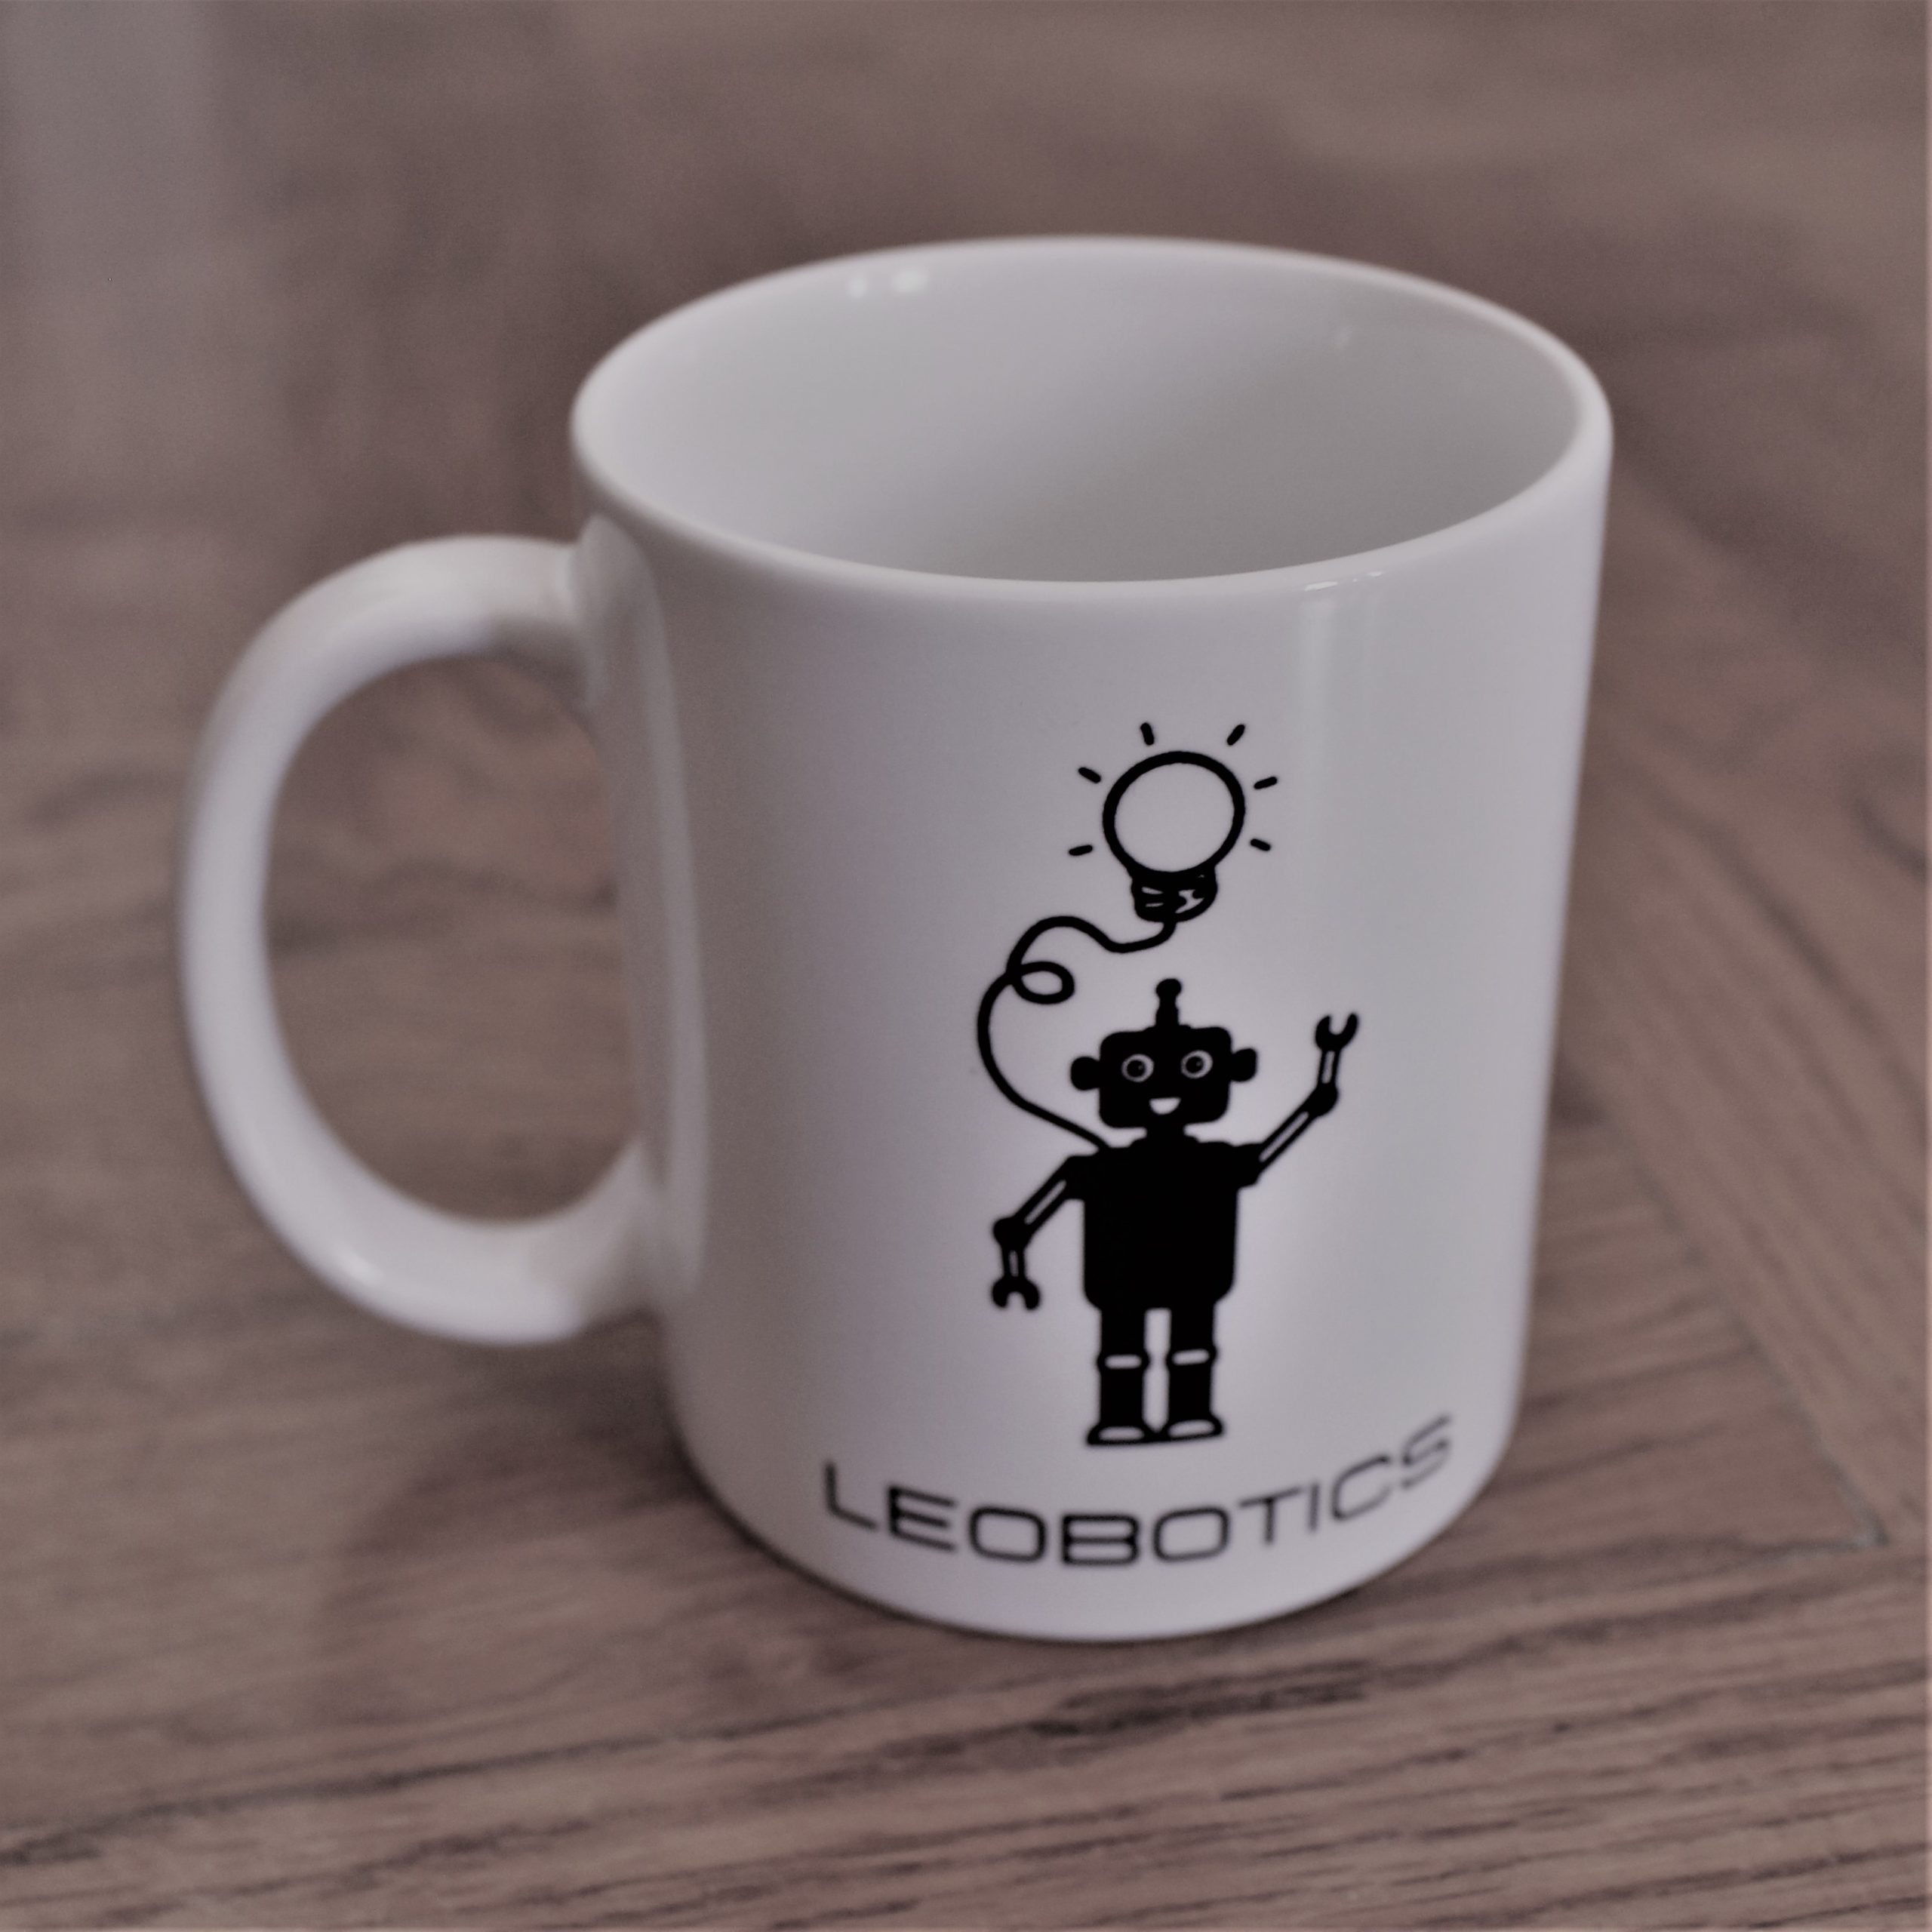 tasse robot leobotics mug verre blanc